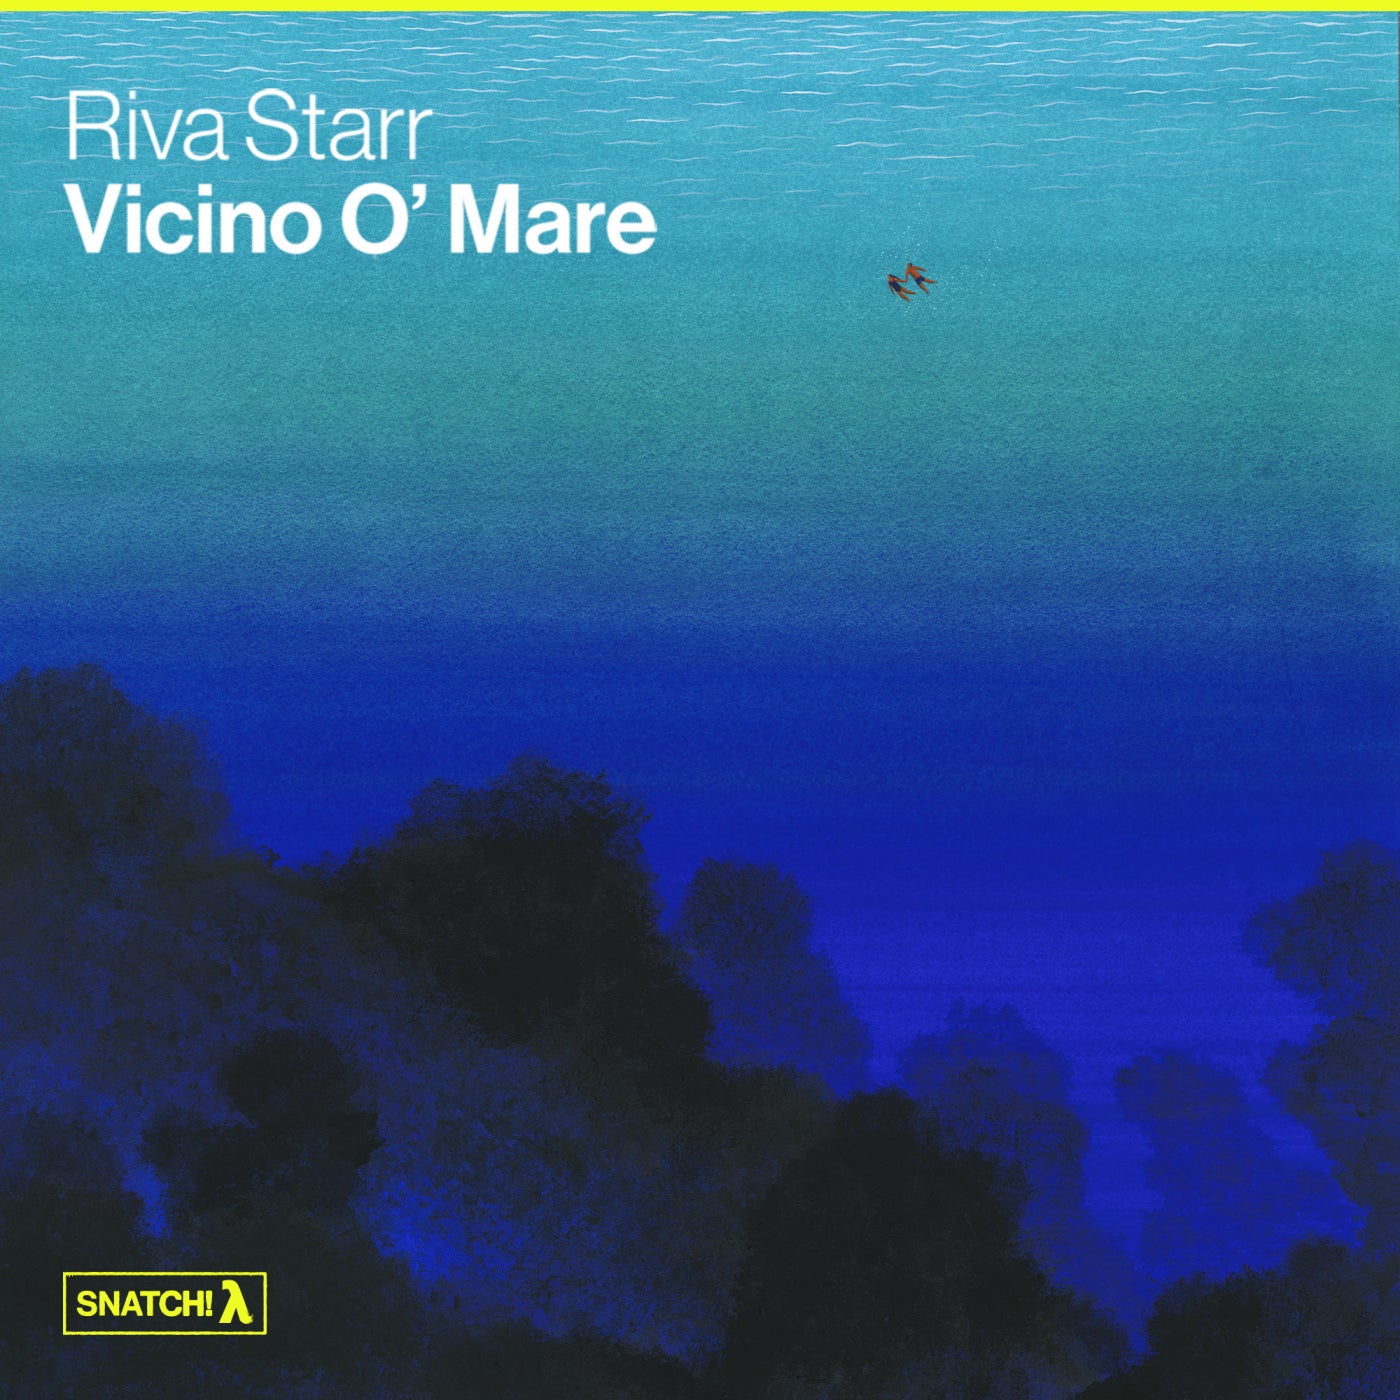 image cover: Riva Starr - Vicino O' Mare on Snatch! Records